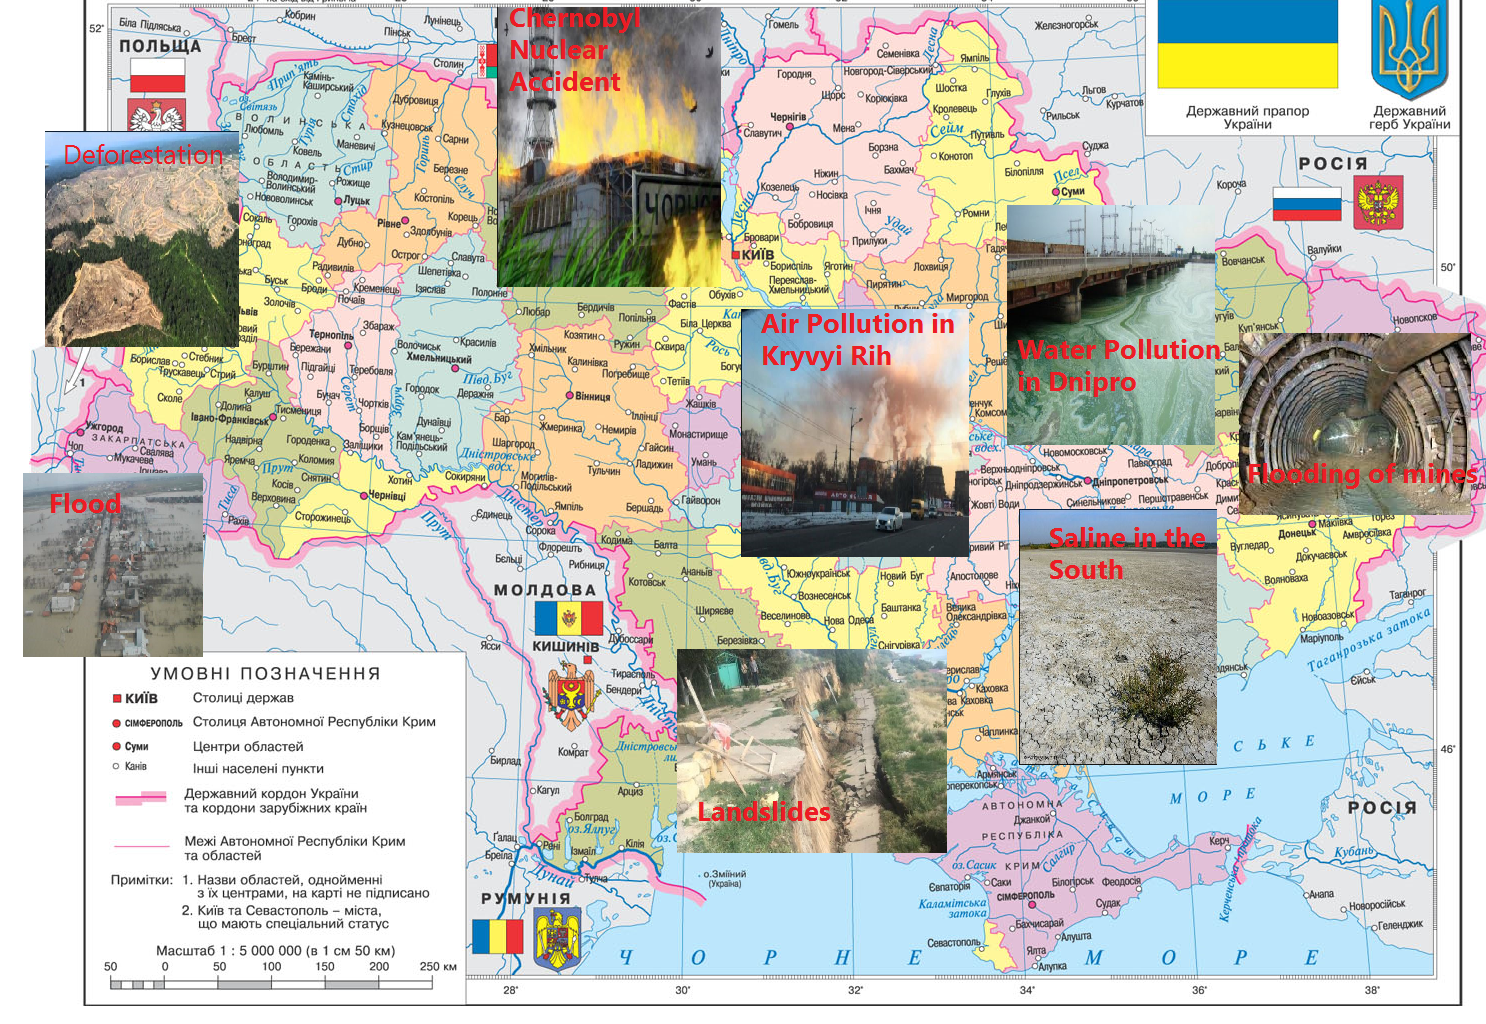 Ukraine Environment Poster